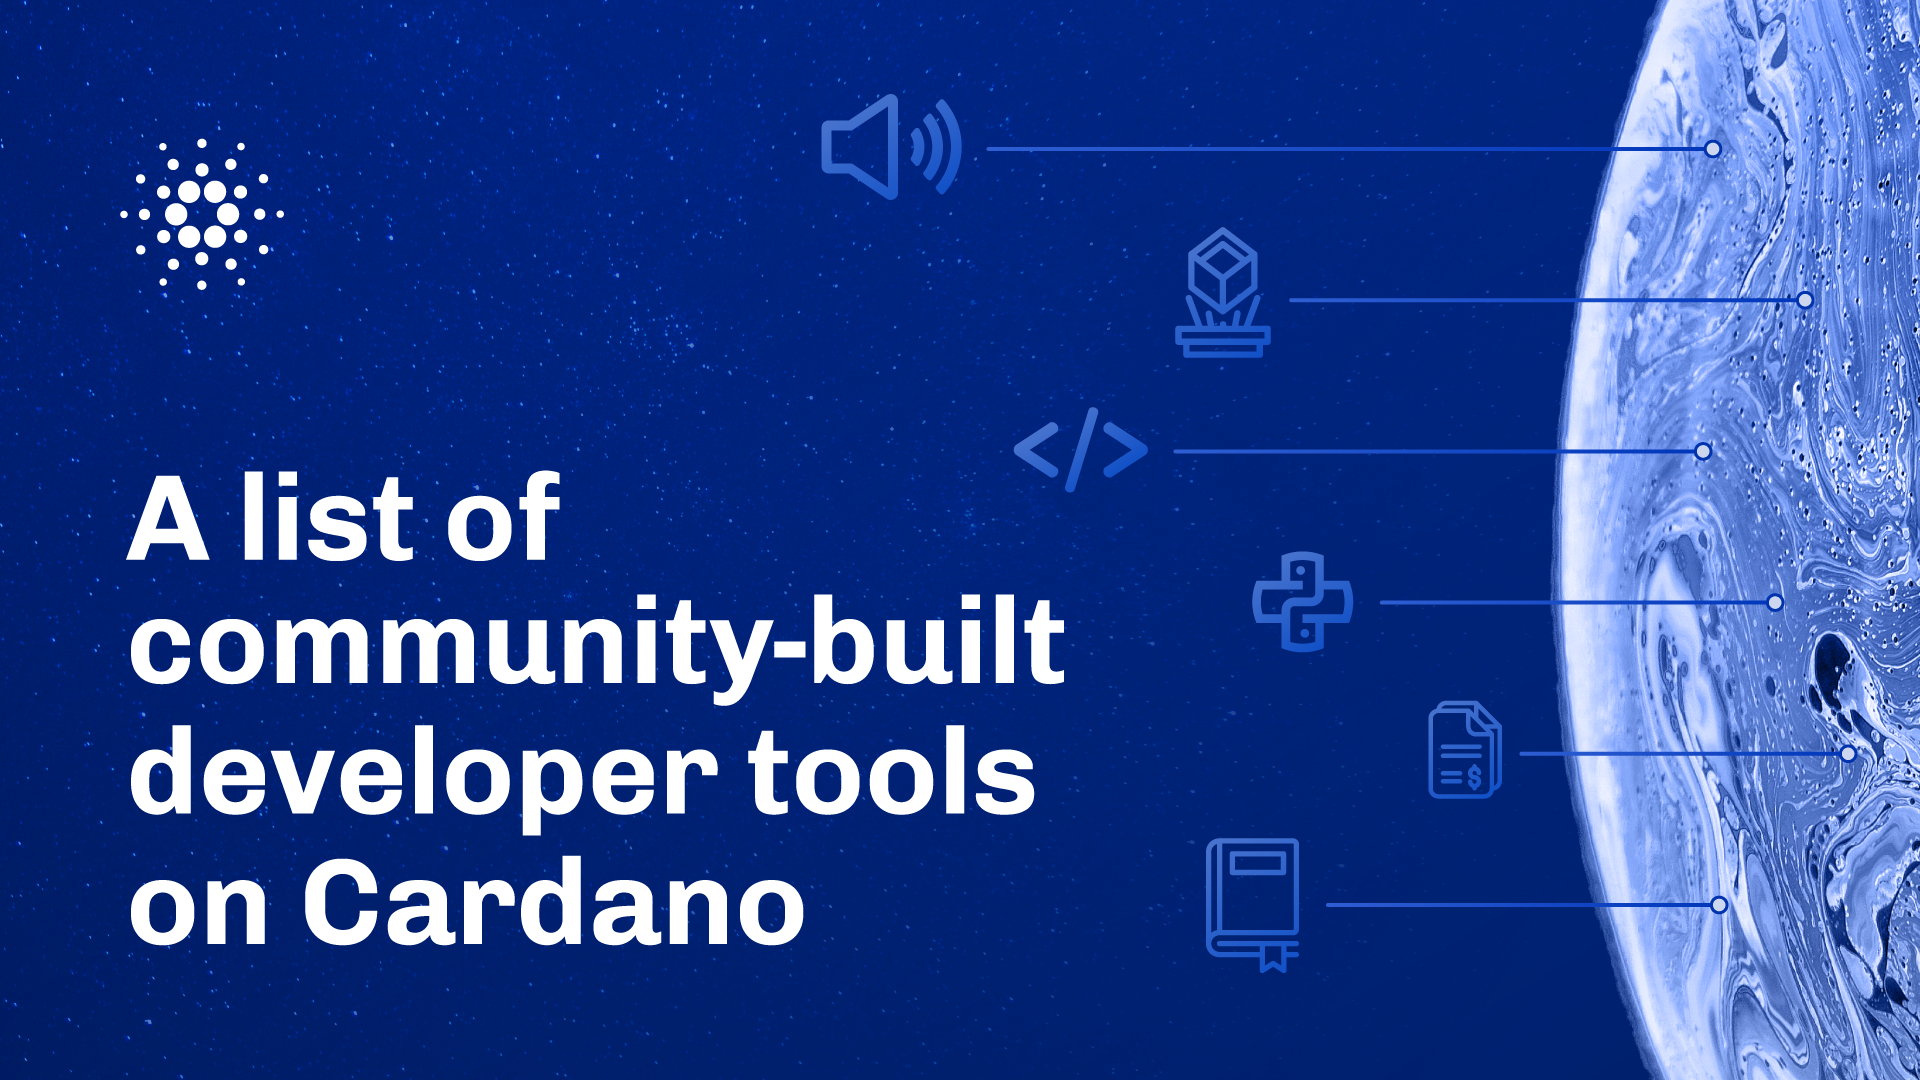 A list of community-built developer tools on Cardano